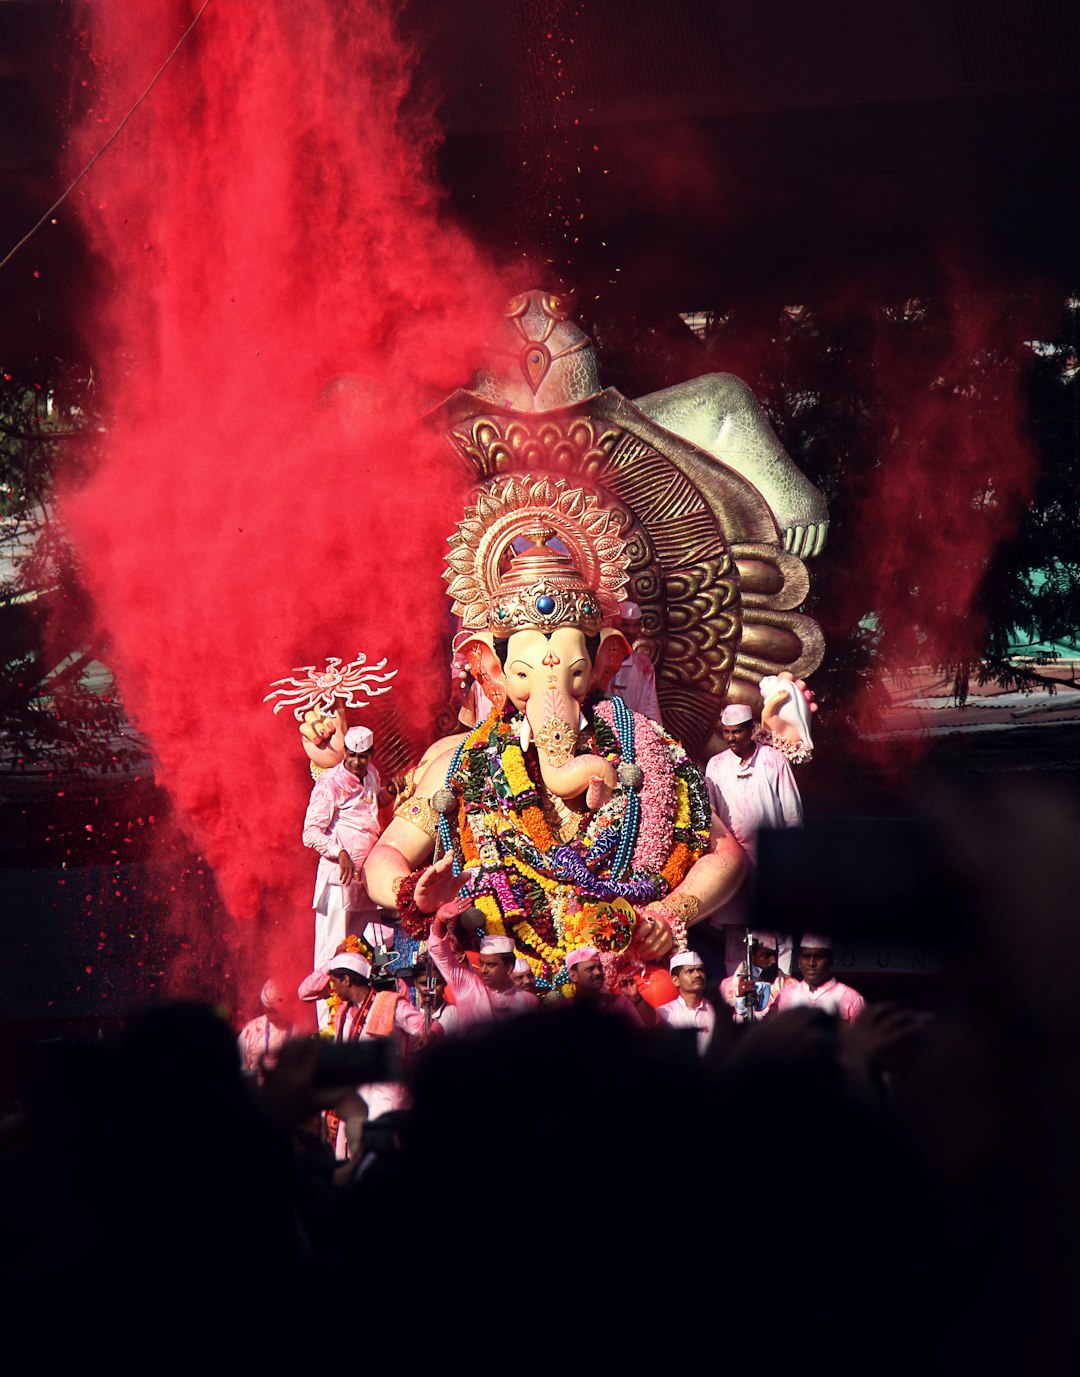 500 Ganesh Pictures Hd Download Free Images On Unsplash